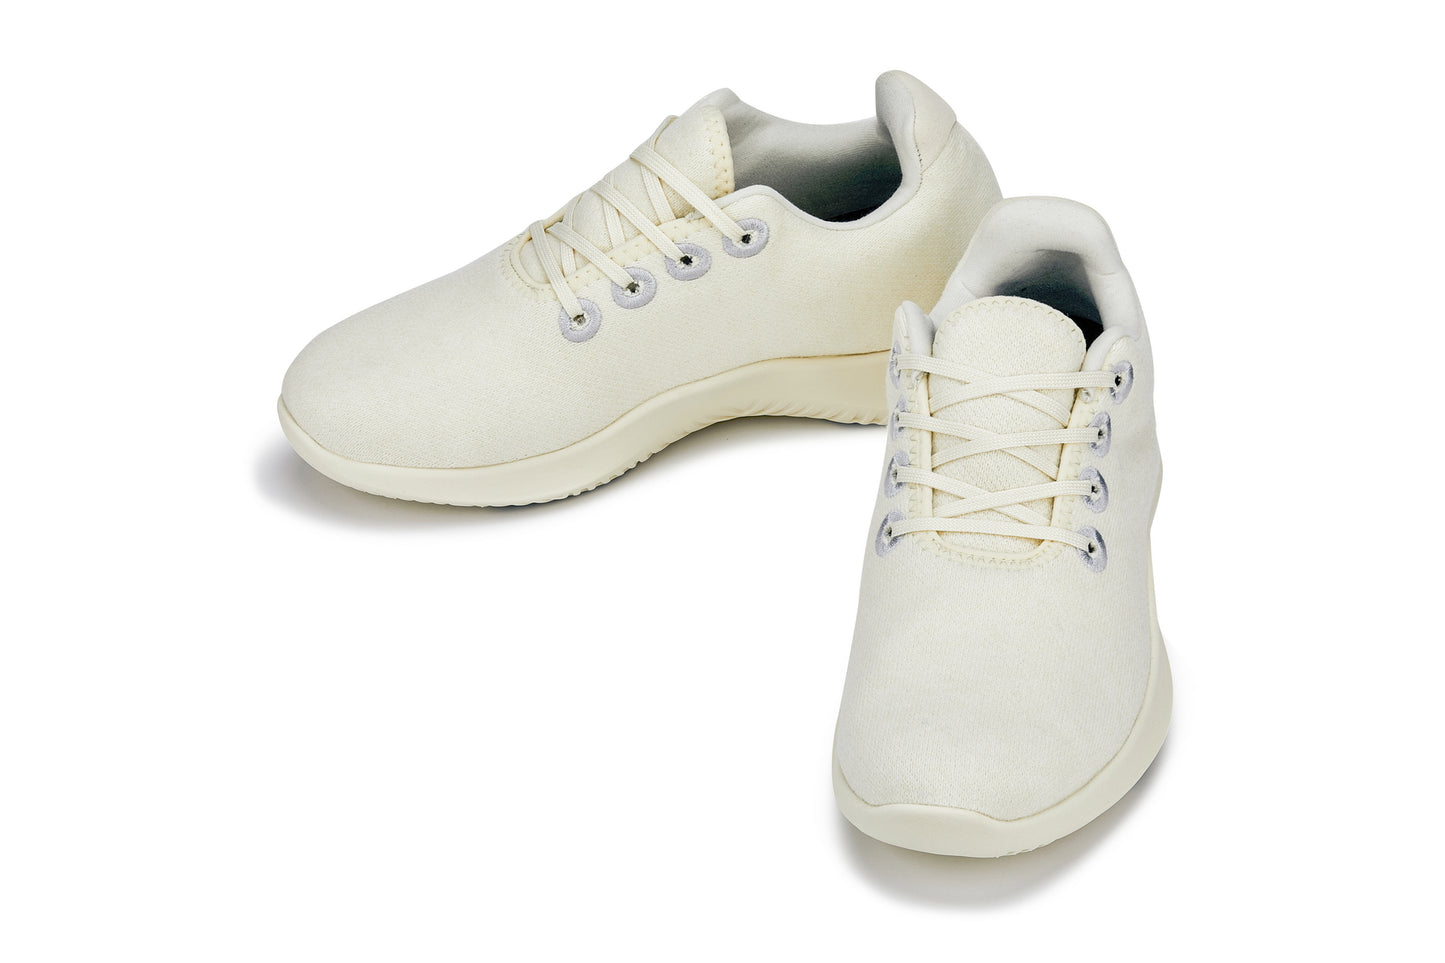 CALTO - Q504 - 2.4 بوصة (كريمي) - أحذية رياضية خفيفة الوزن للغاية